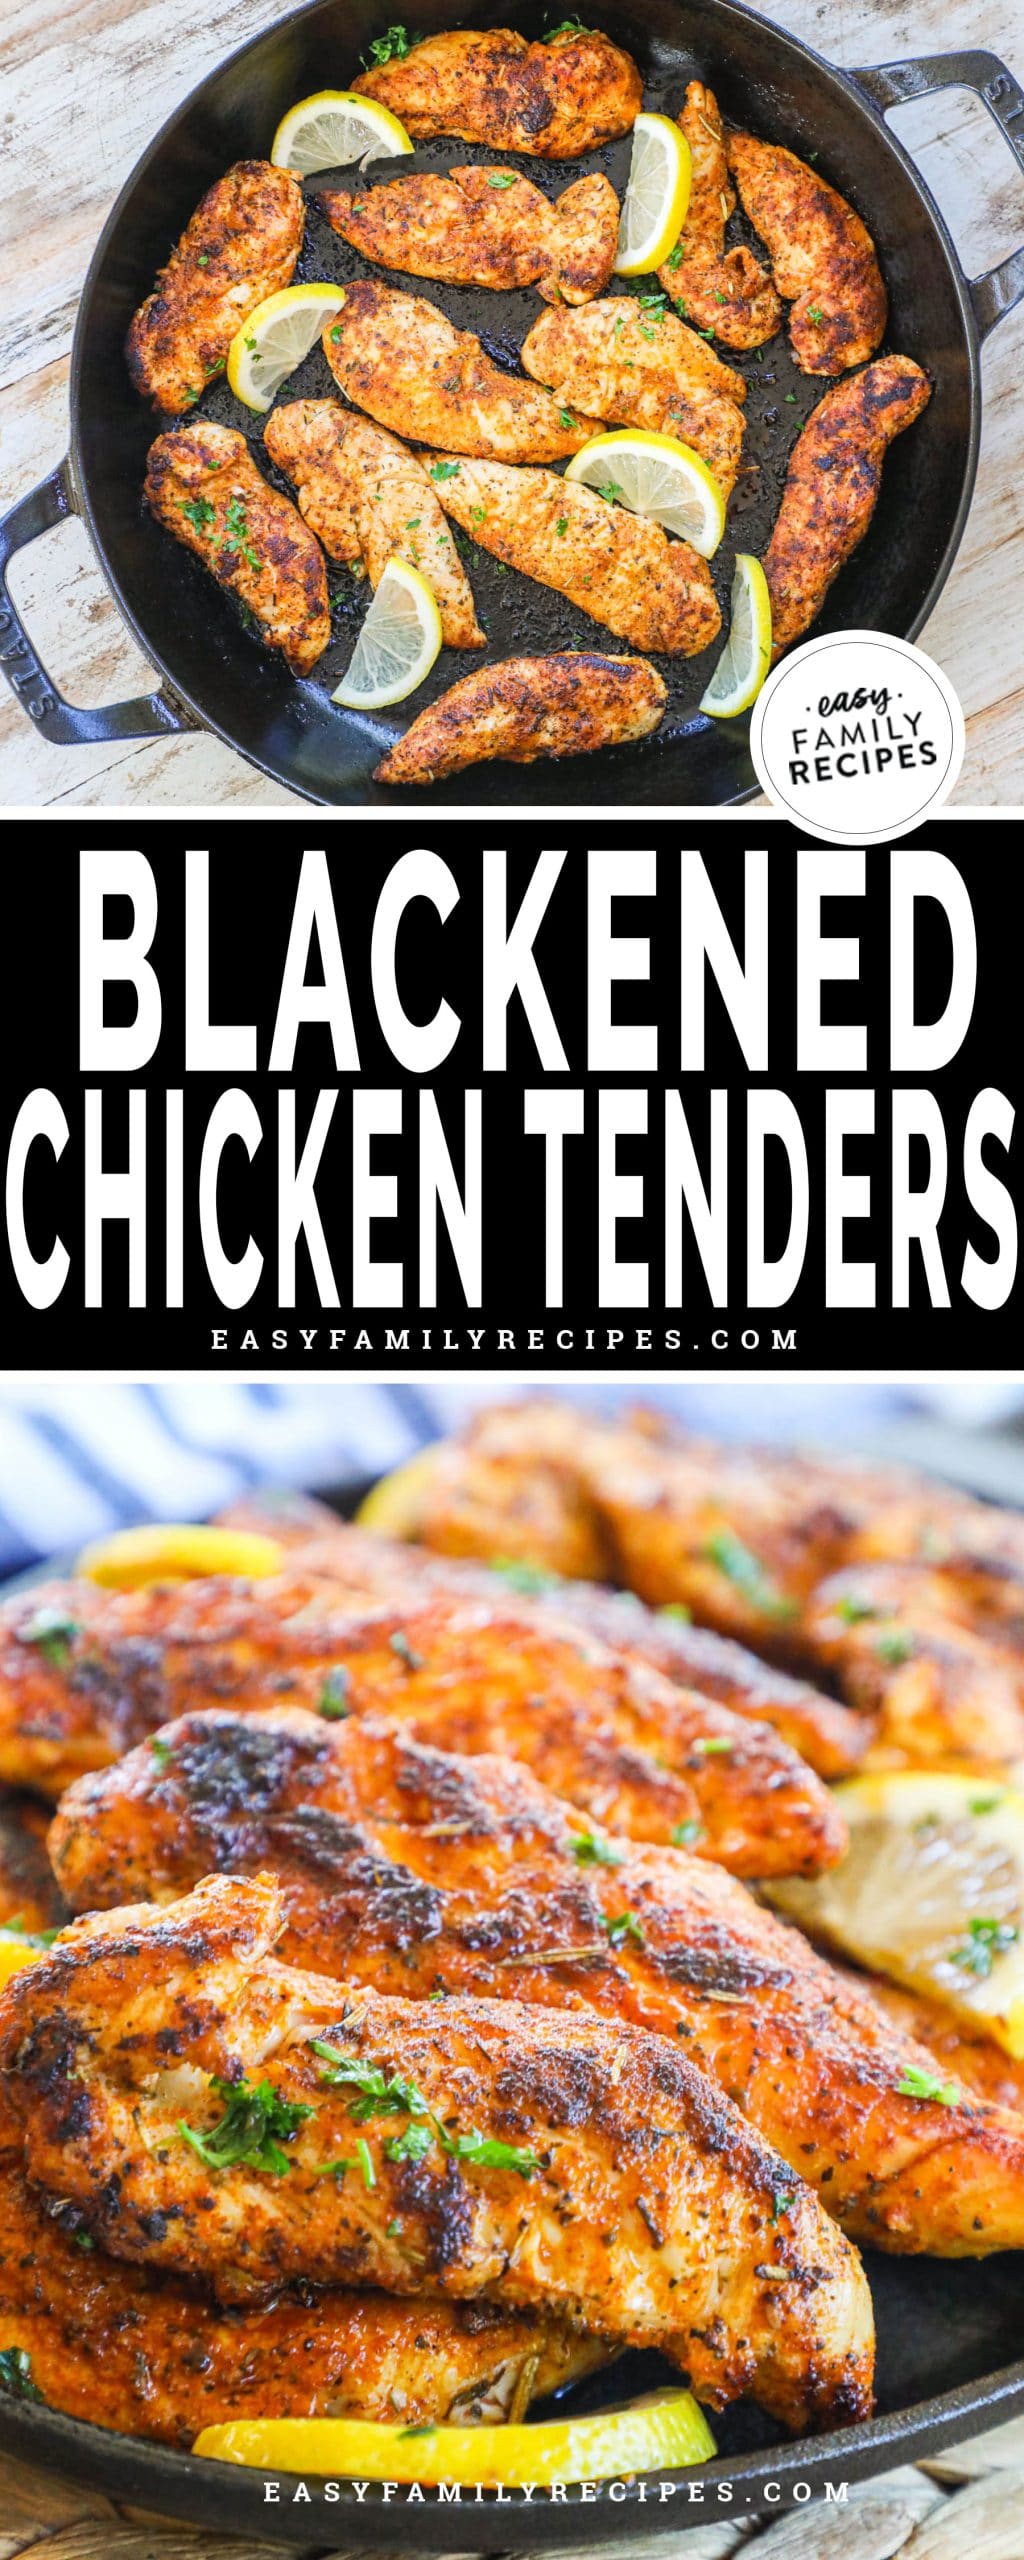 Blackened Chicken Tenders in cast iron skillet with lemon wedges.